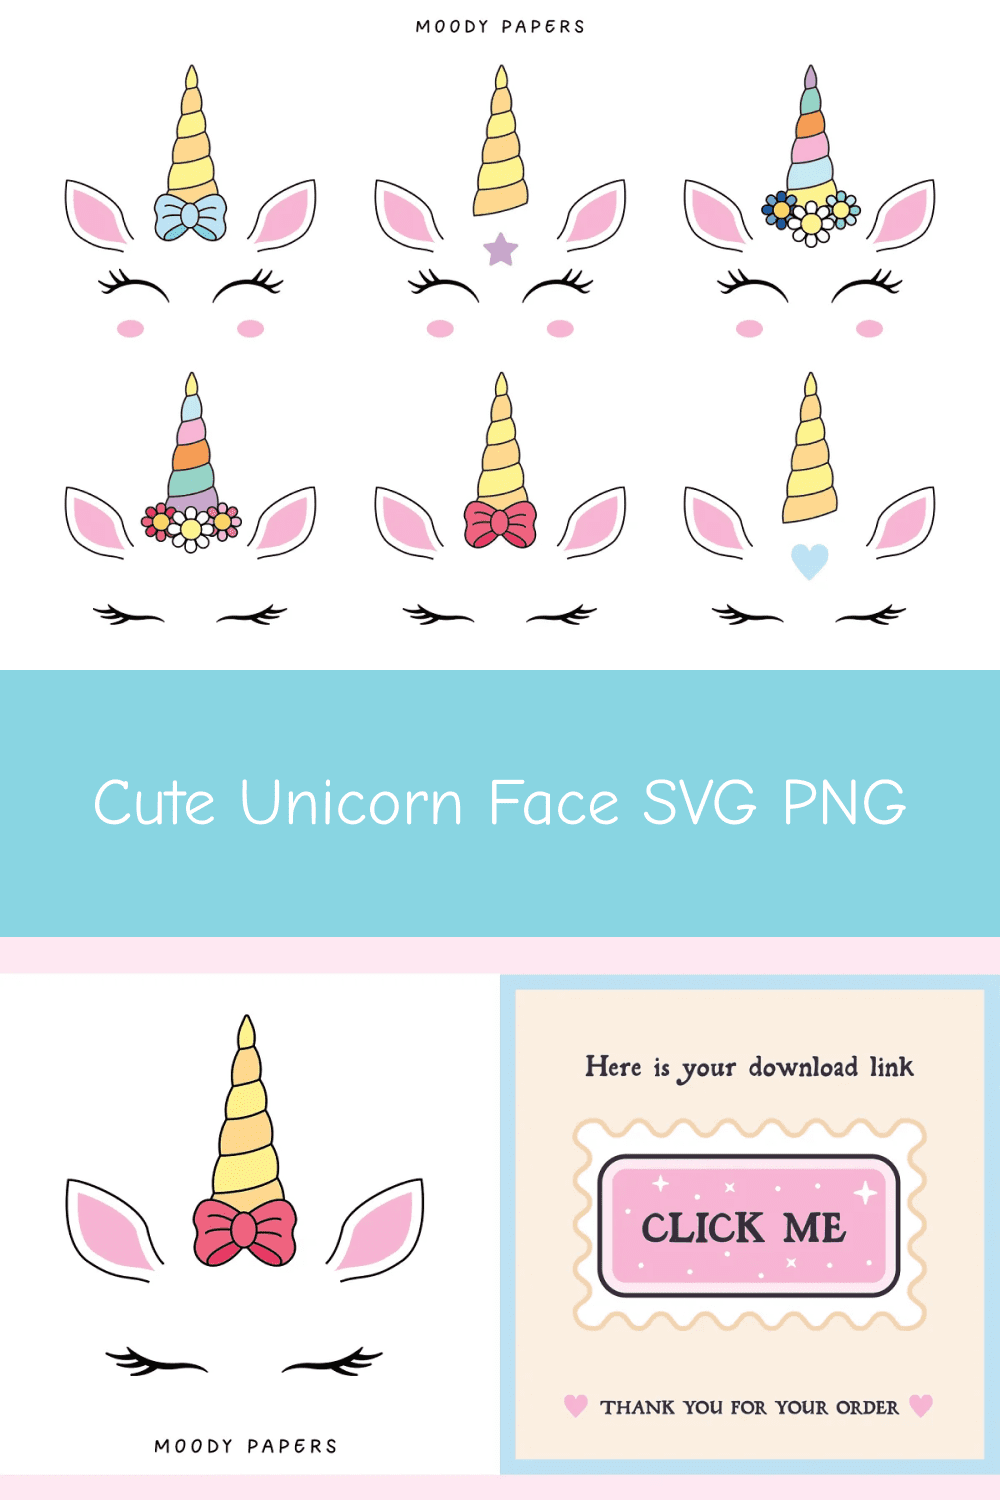 Cute Unicorn Face SVG PNG.